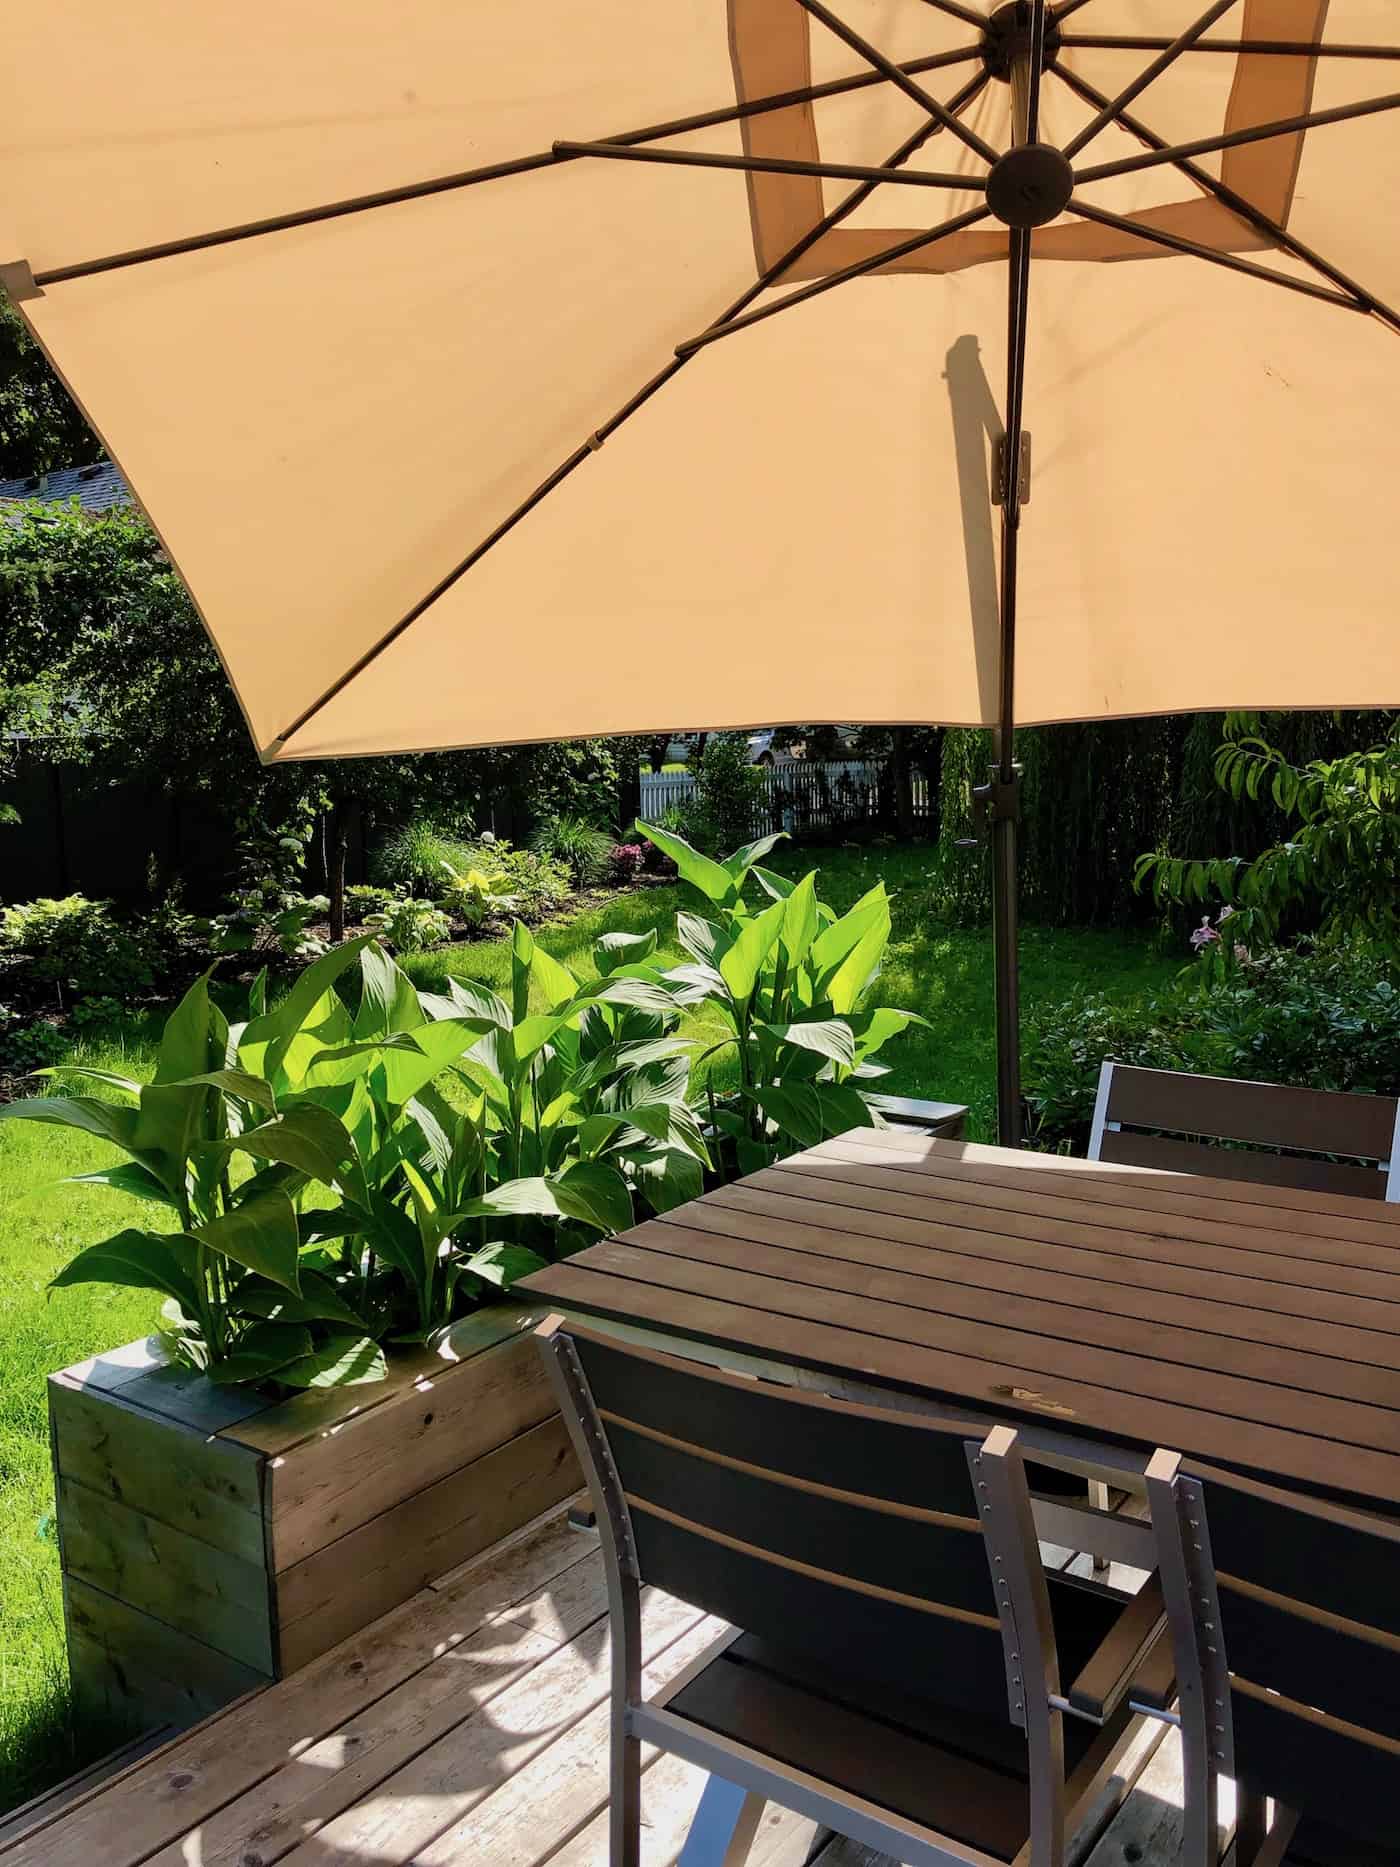 Sun umbrella and patio table on backyard deck